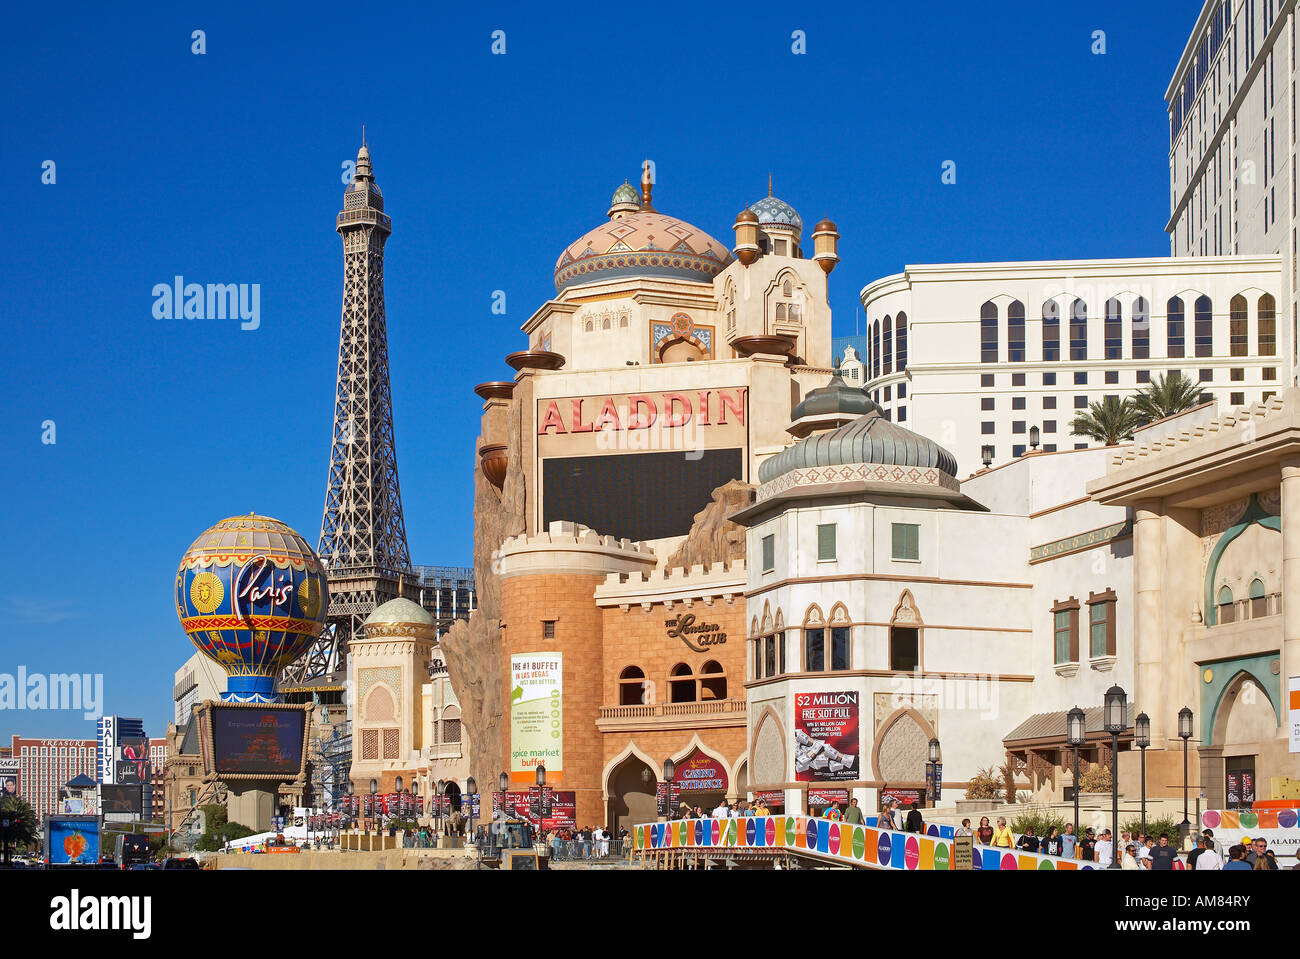 Paris Casino and Aladdin Hotels, Las Vegas, Nevada - PICRYL